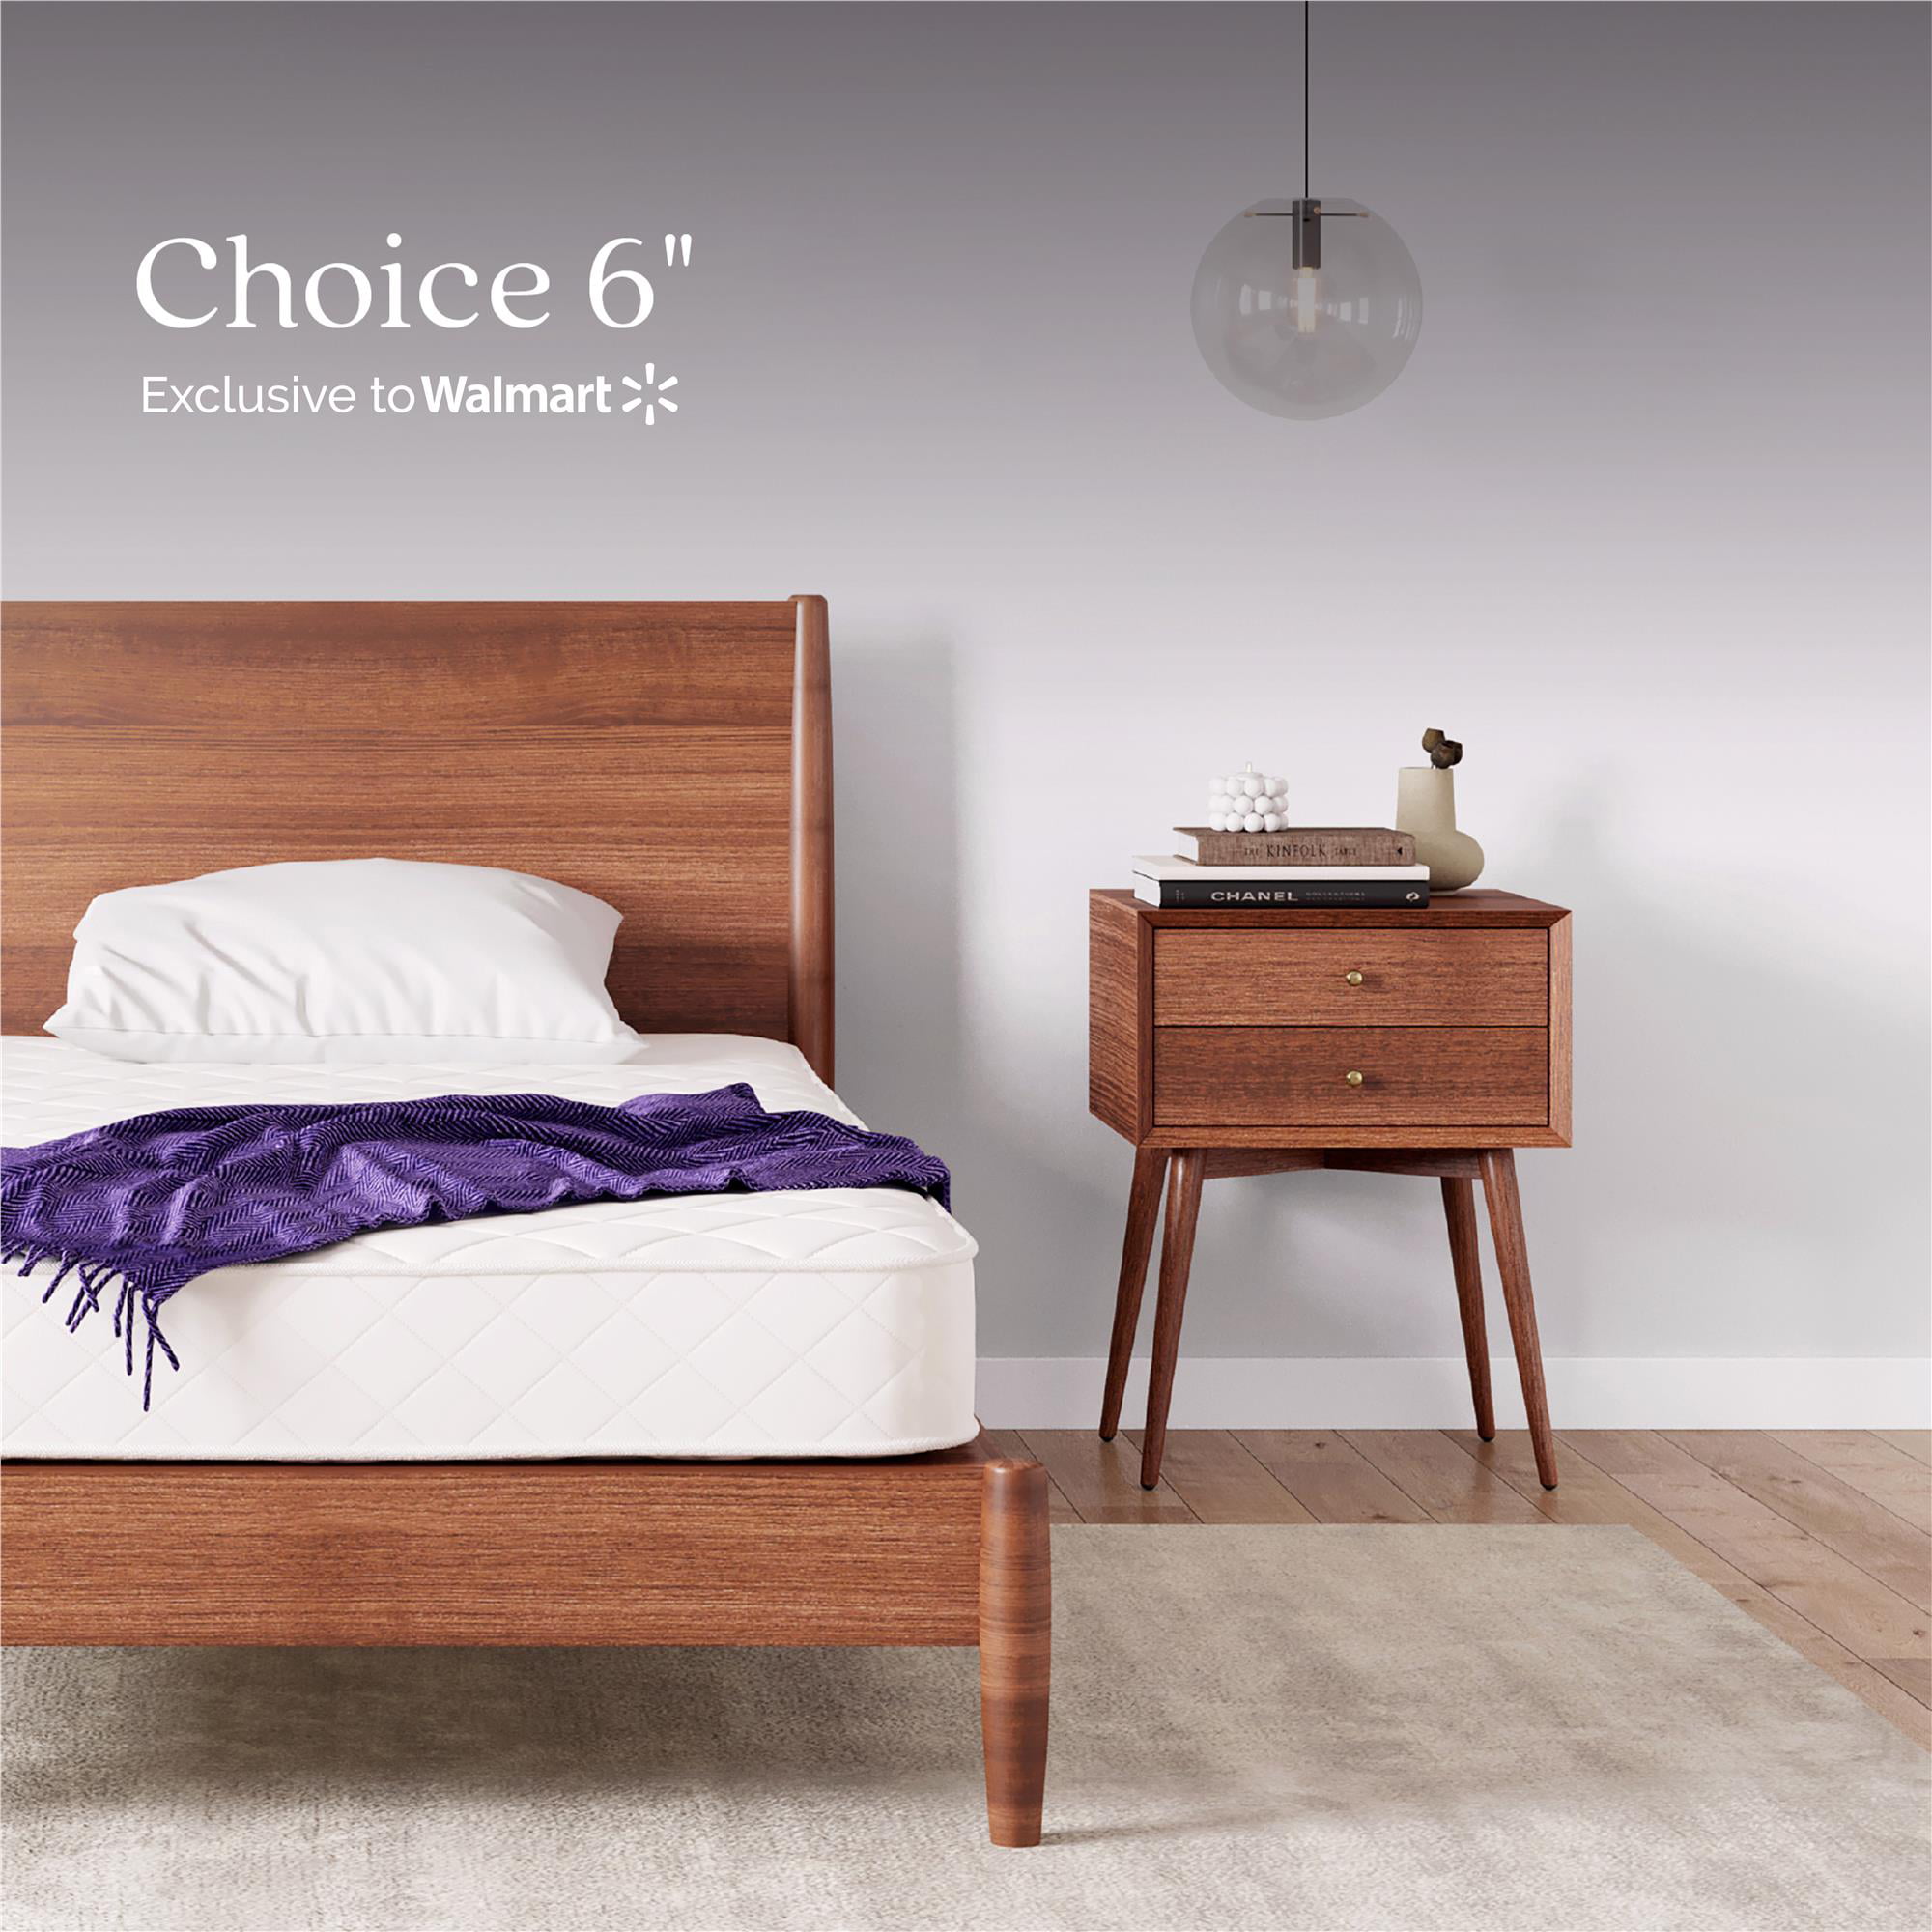 Signature Sleep Choice 6 Bonnell Coil, Sleep Train Twin Size Bed Dimensions